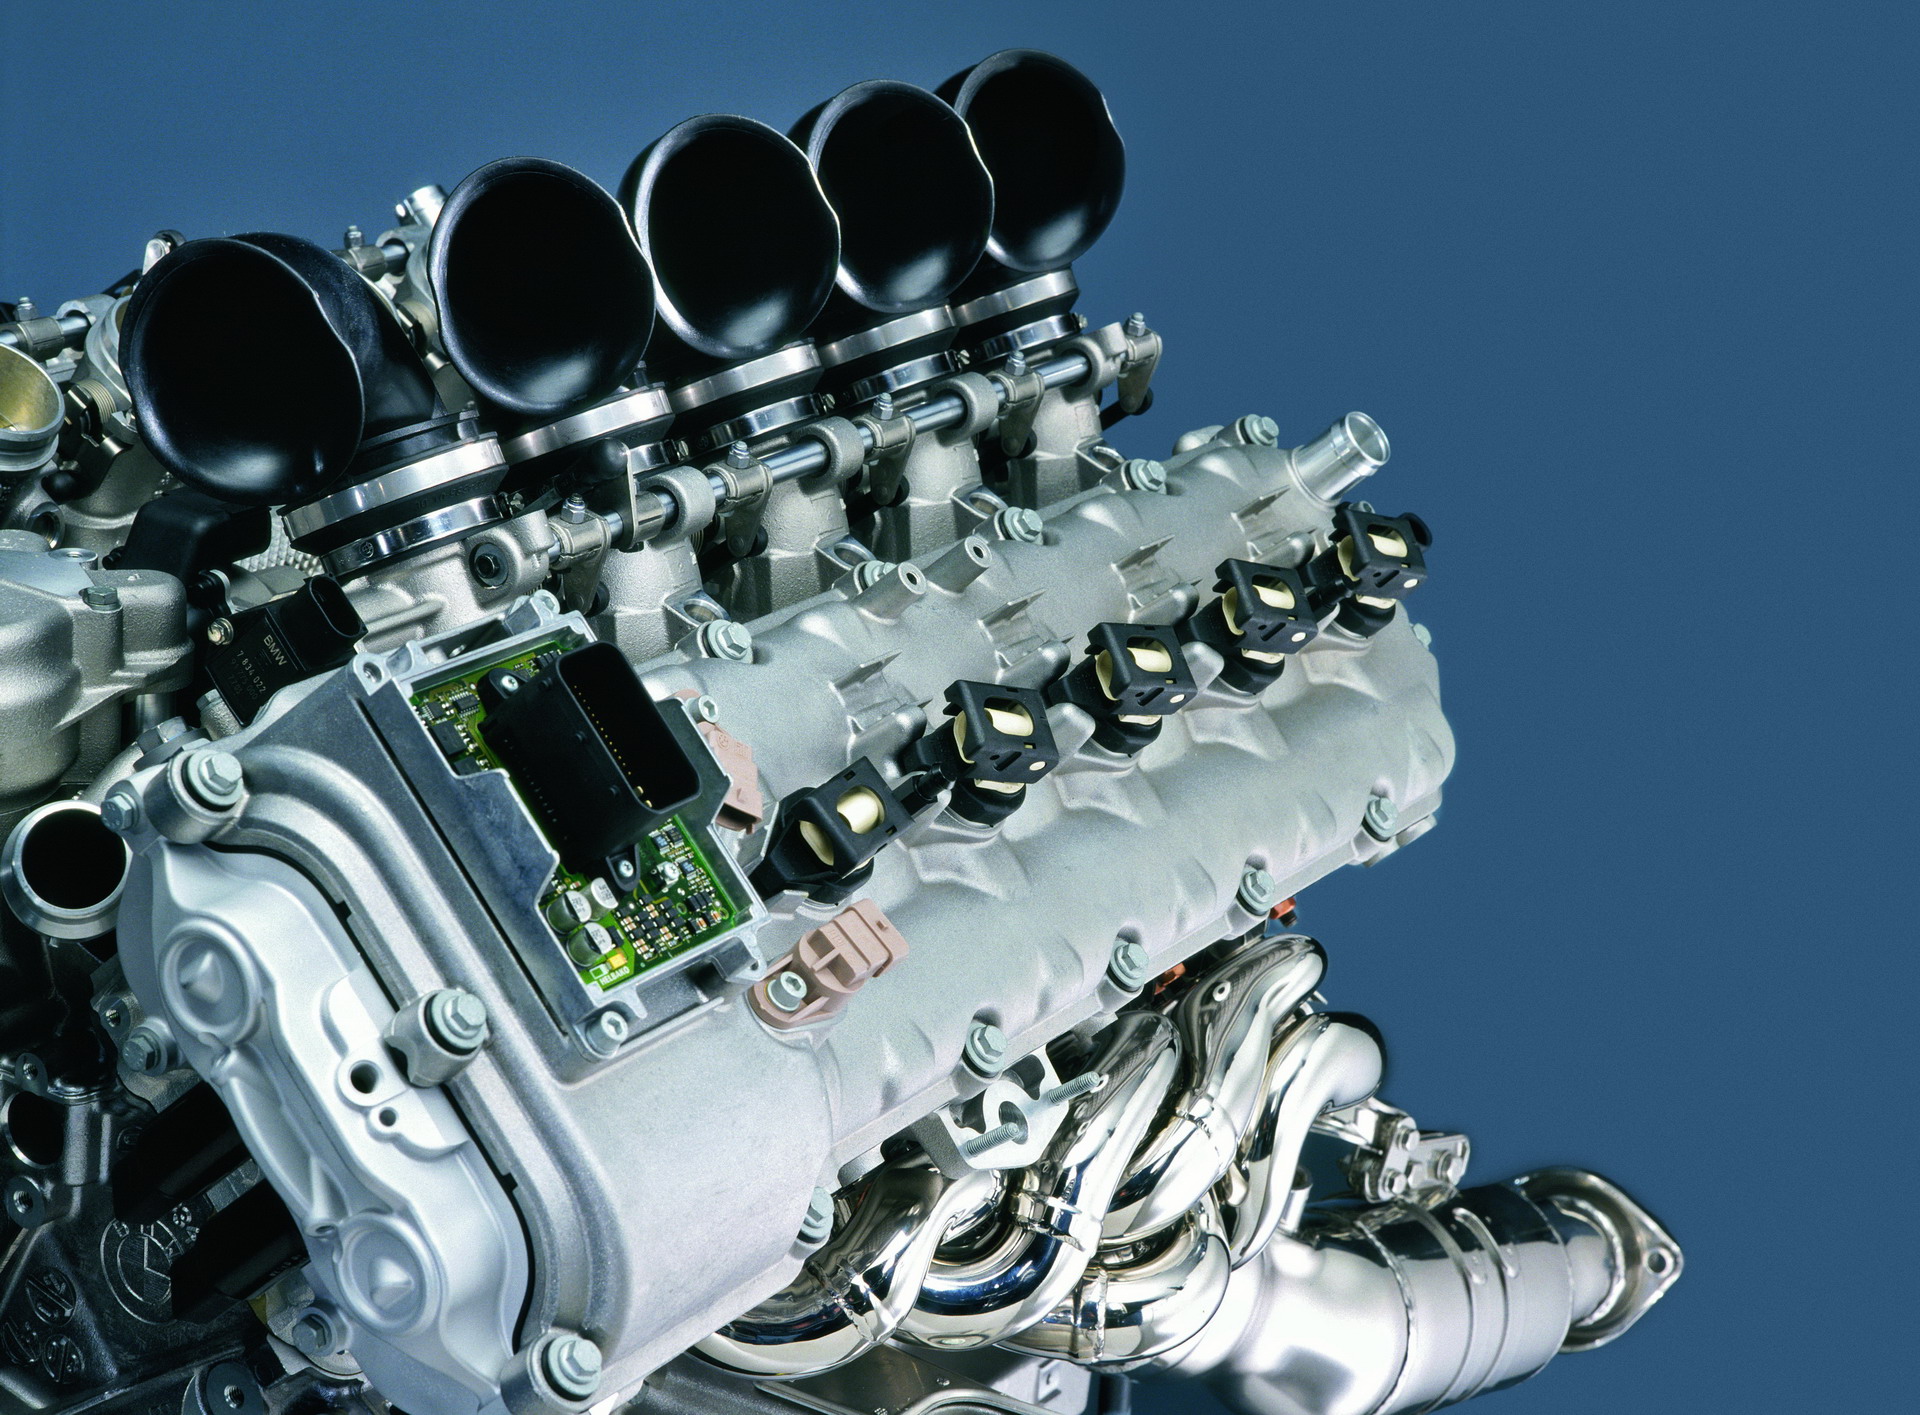 What Bmw Has A V10 Engine The Bmw S85 V10